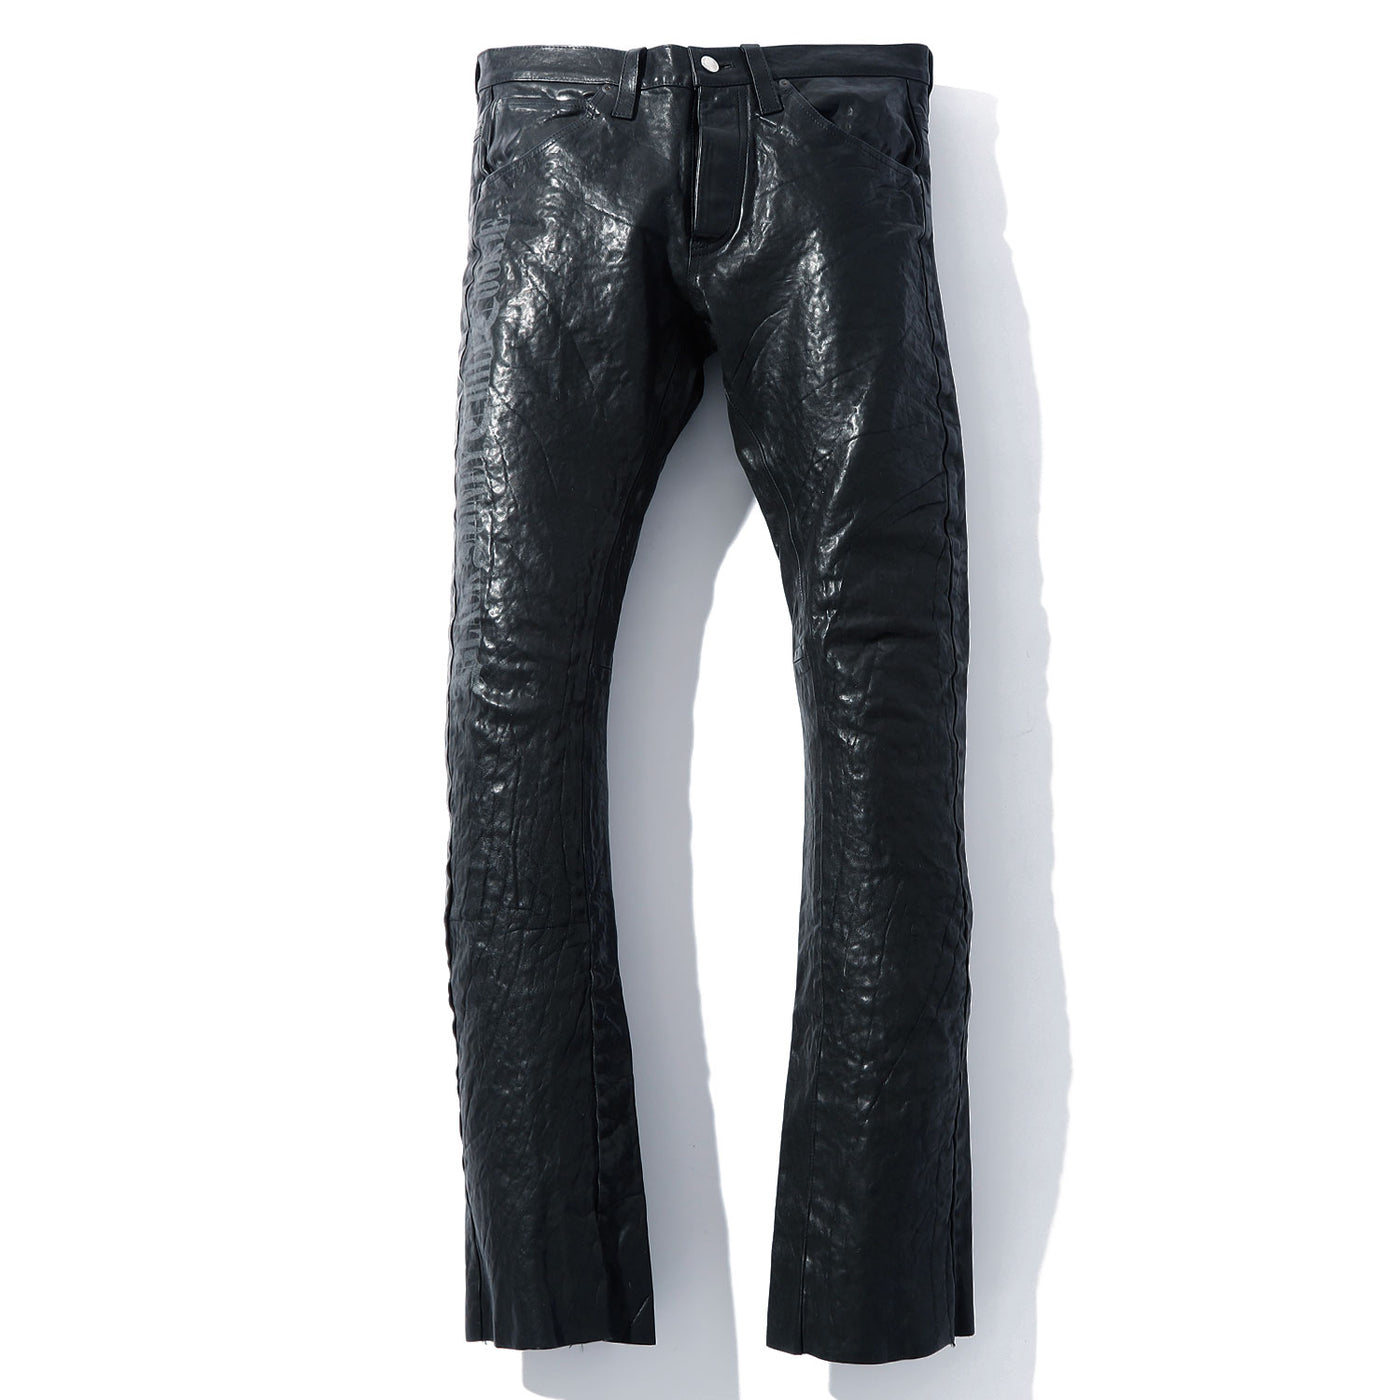 【BLACK HONEY CHILI COOKIE × BACKLASH】Leather Pants / BLACK